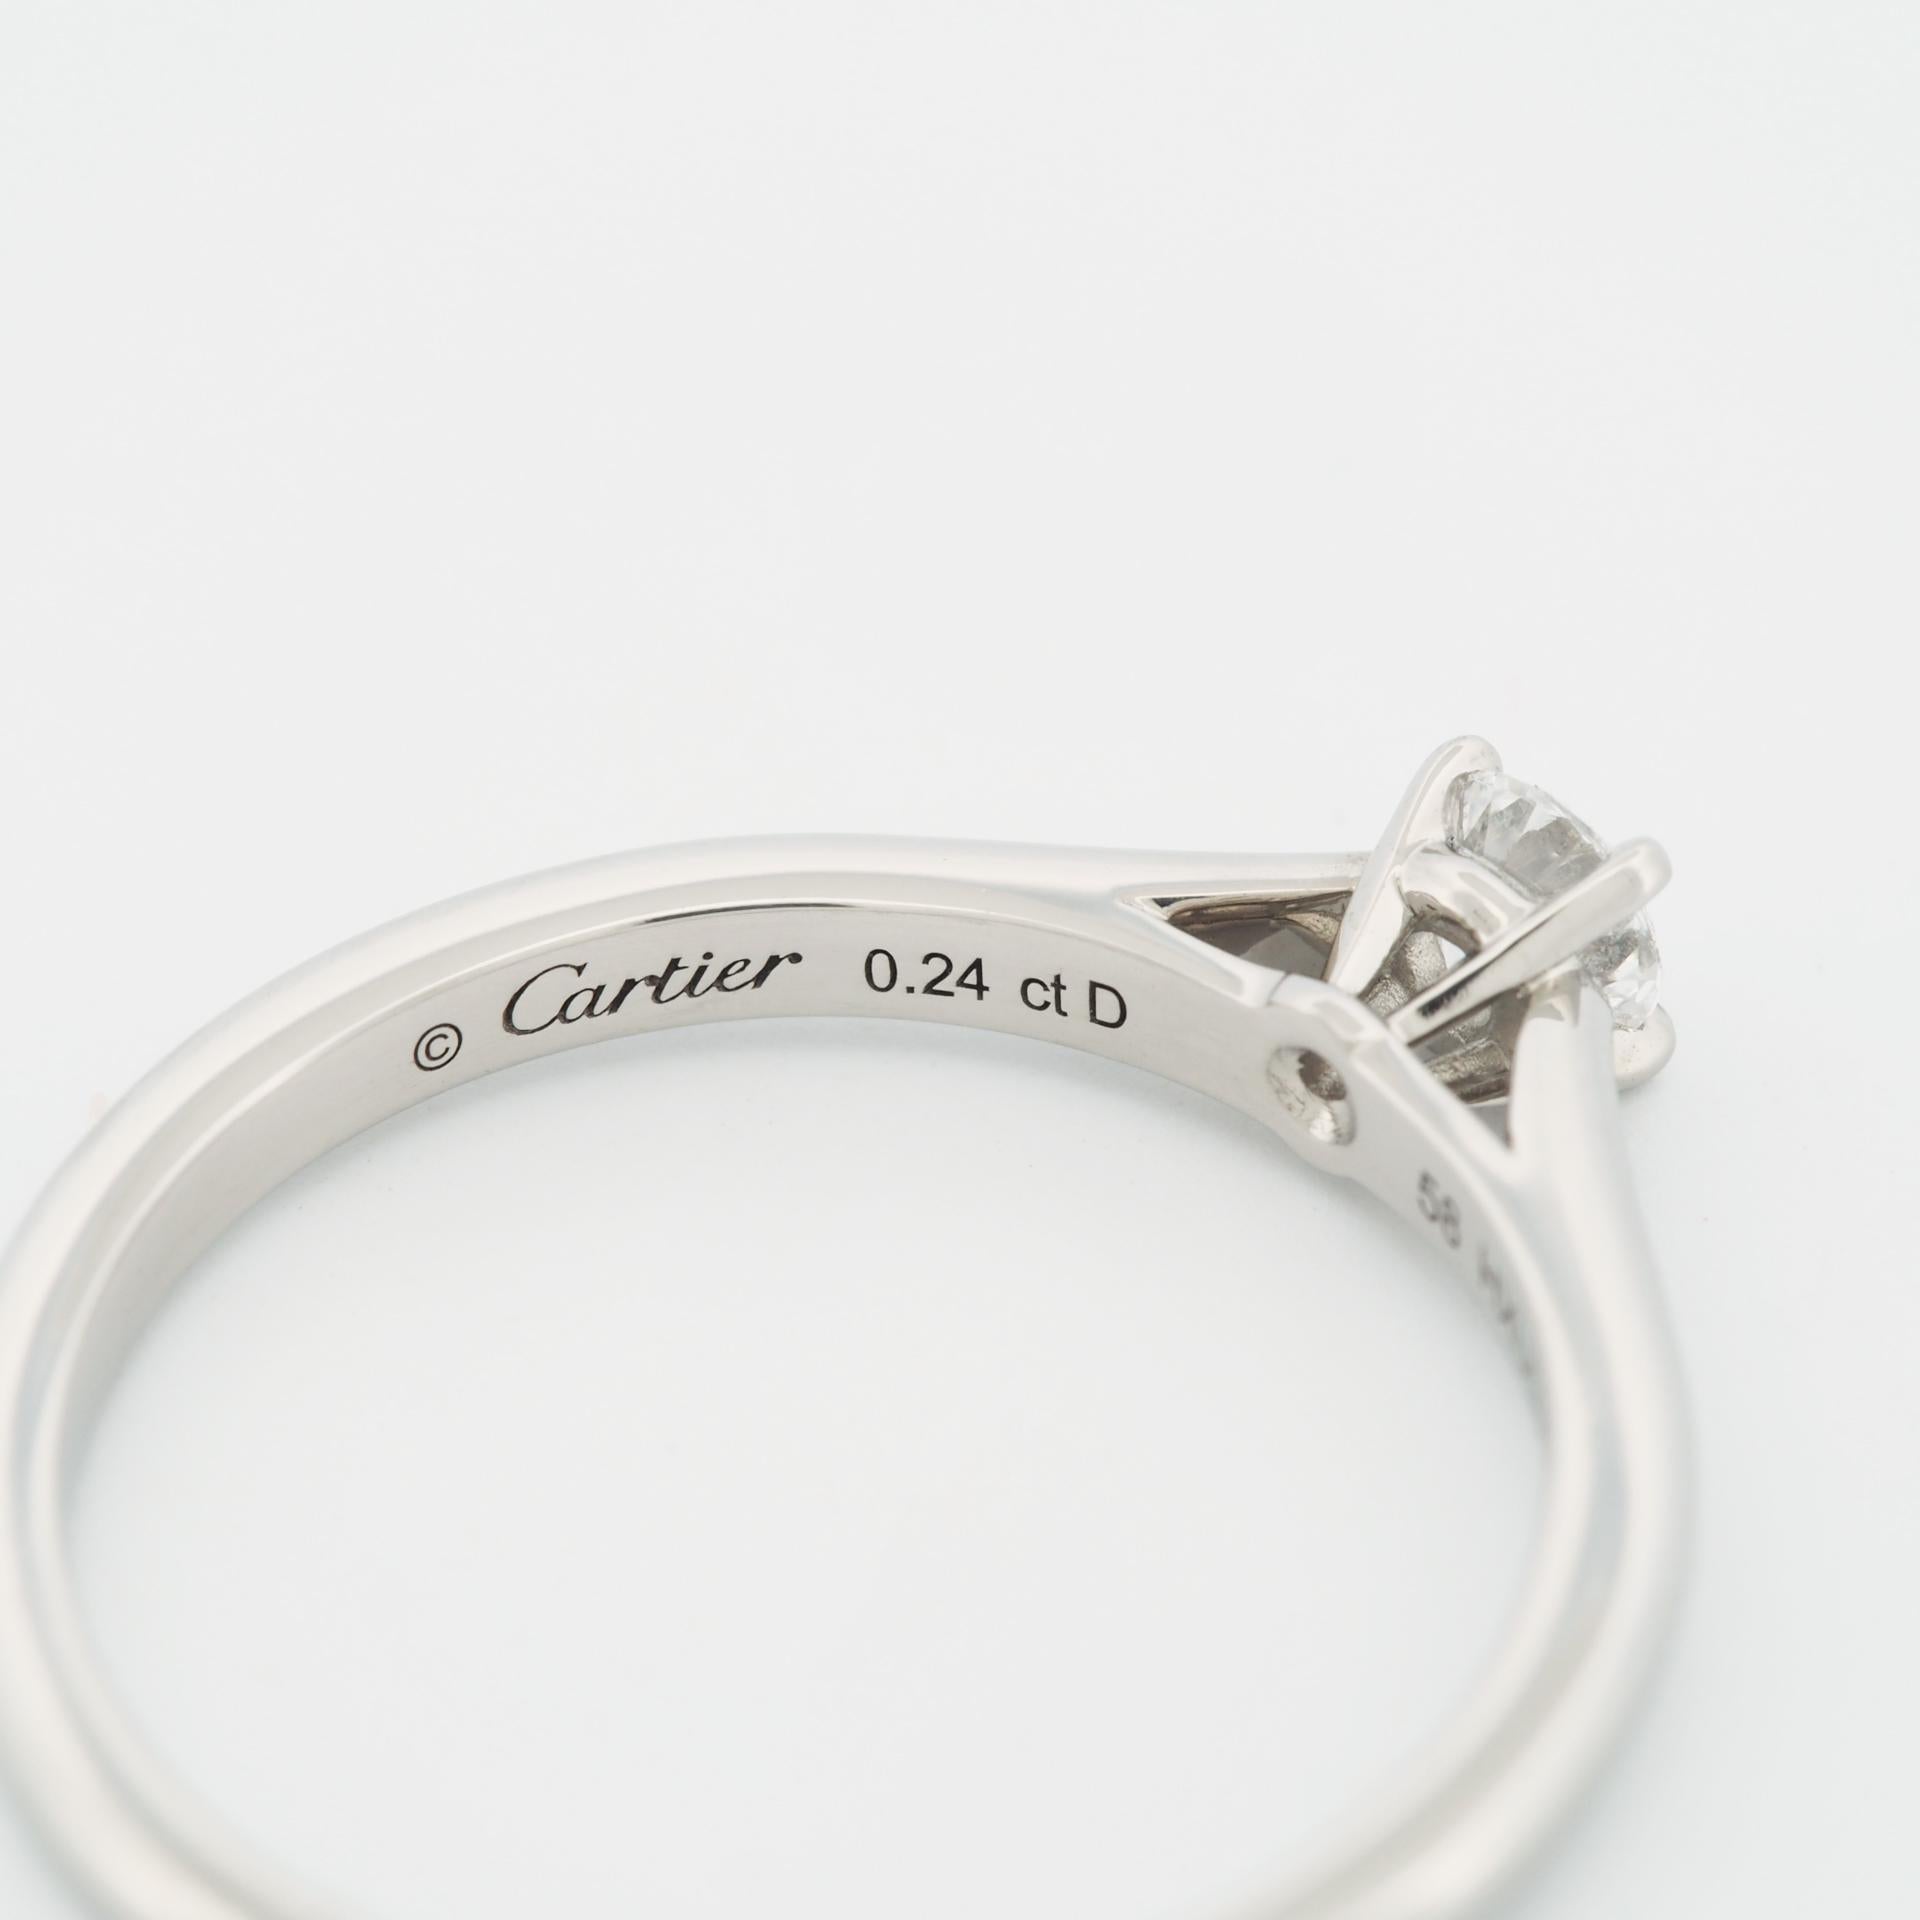 Round Cut Cartier 1895 Solitaire 0.24 Carat Diamond Ring Pt 58